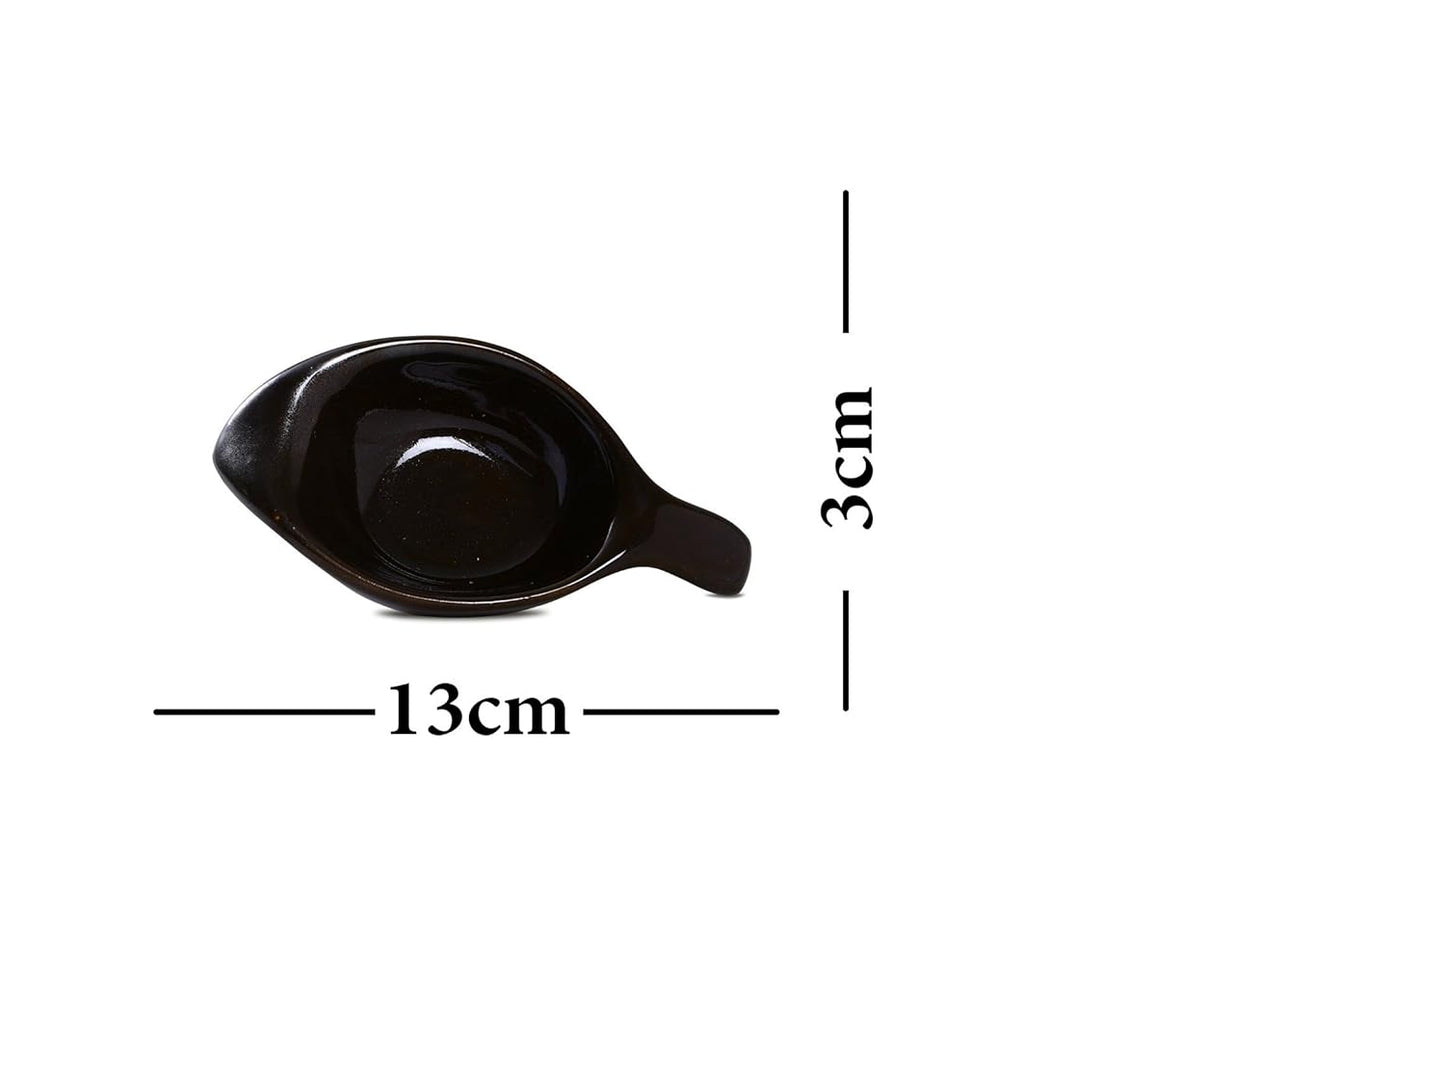 Caffeine Ceramic Handmade Black Glossy Dip and Sauce (Set of 4, 40 ml) - Caffeine Premium Stoneware